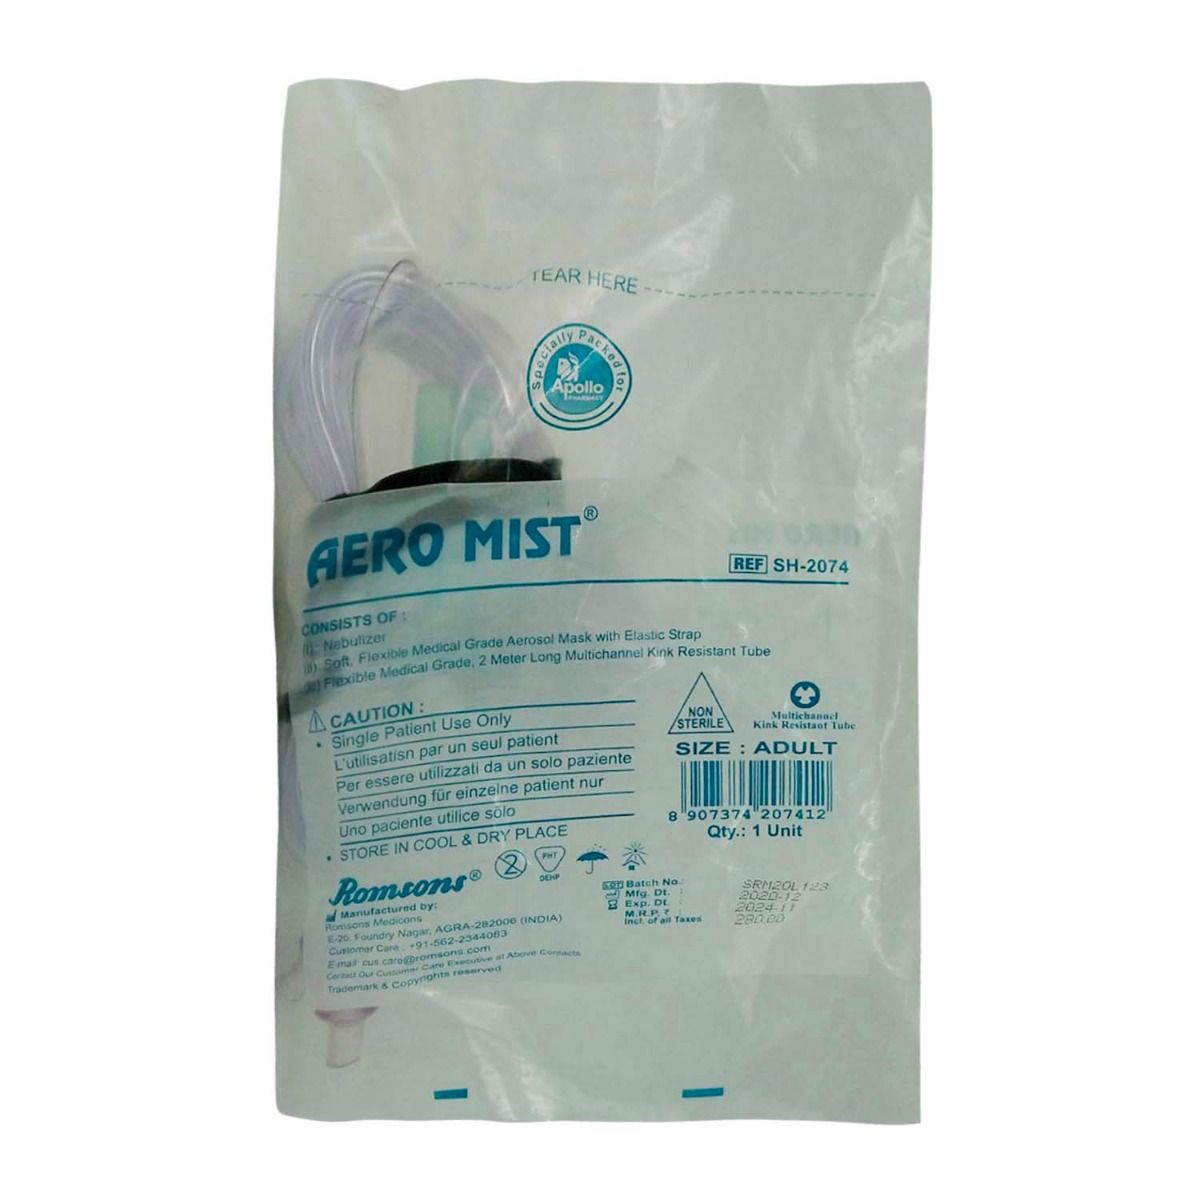 Apollo Pharmacy Aero Mist Adult Nebulizer, 1 Kit, Pack of 1 